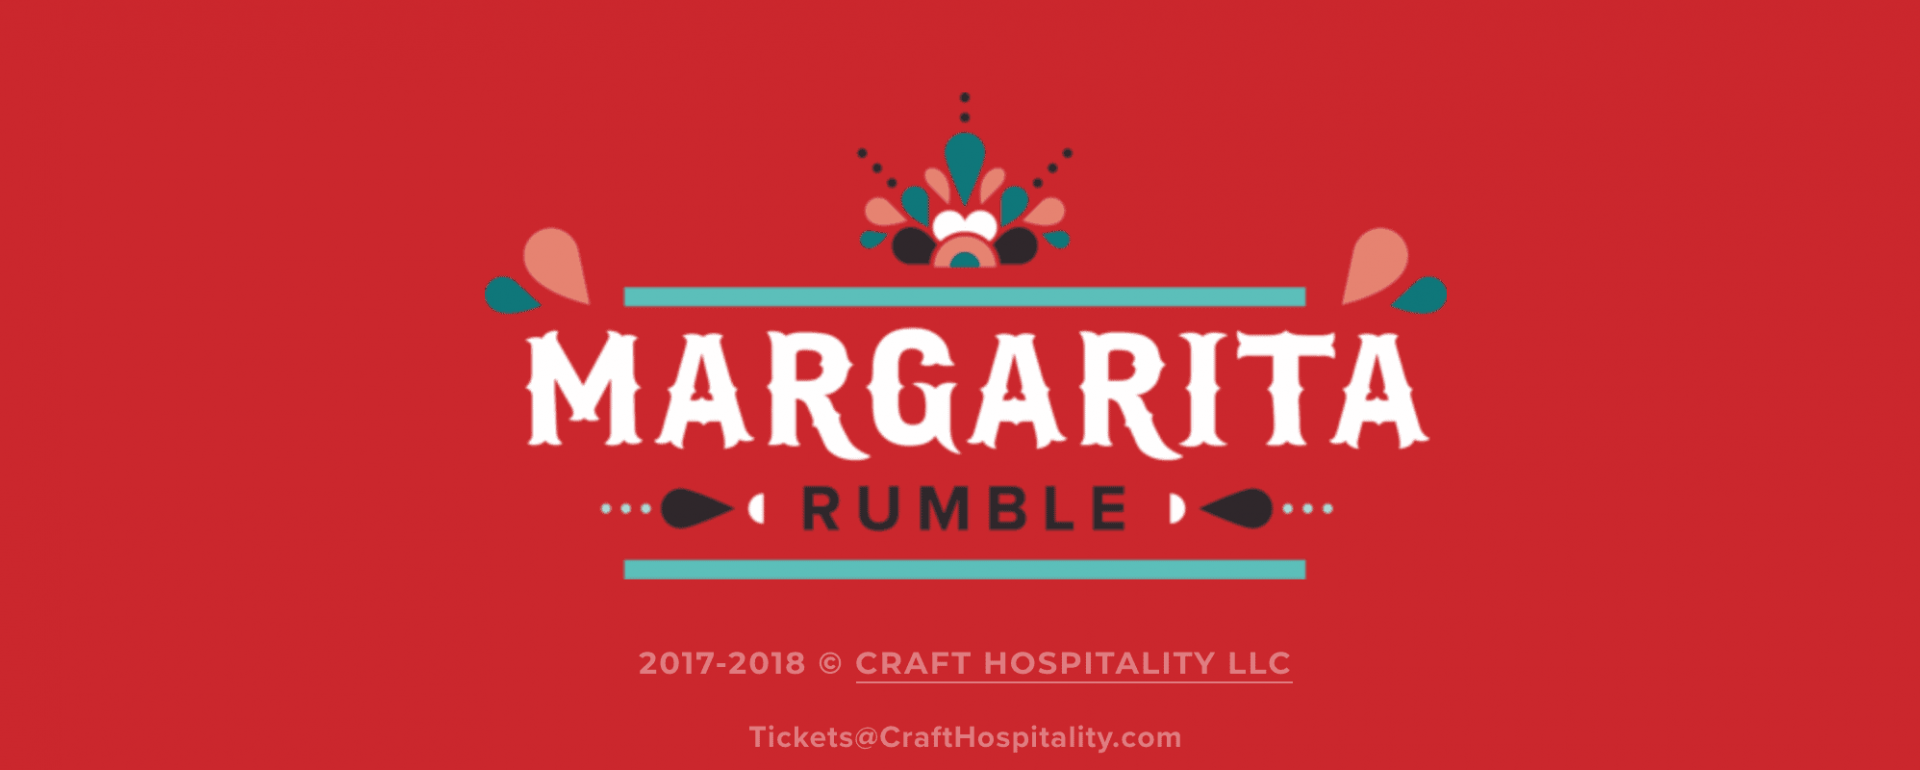 Margarita Rumble San Francisco